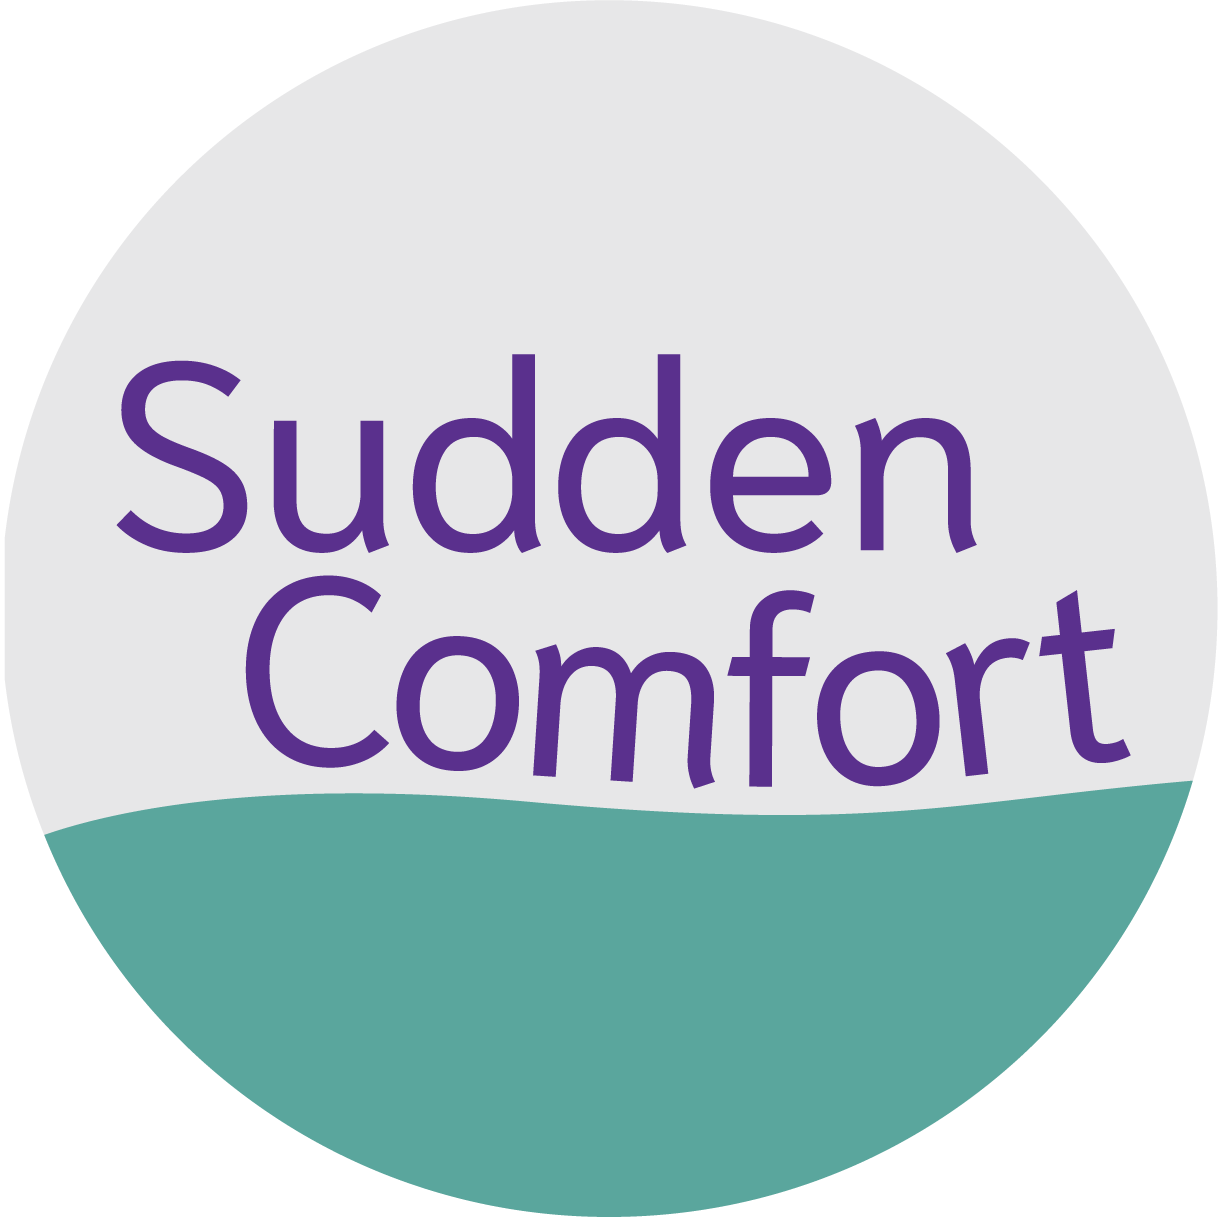 Sudden_Comfort